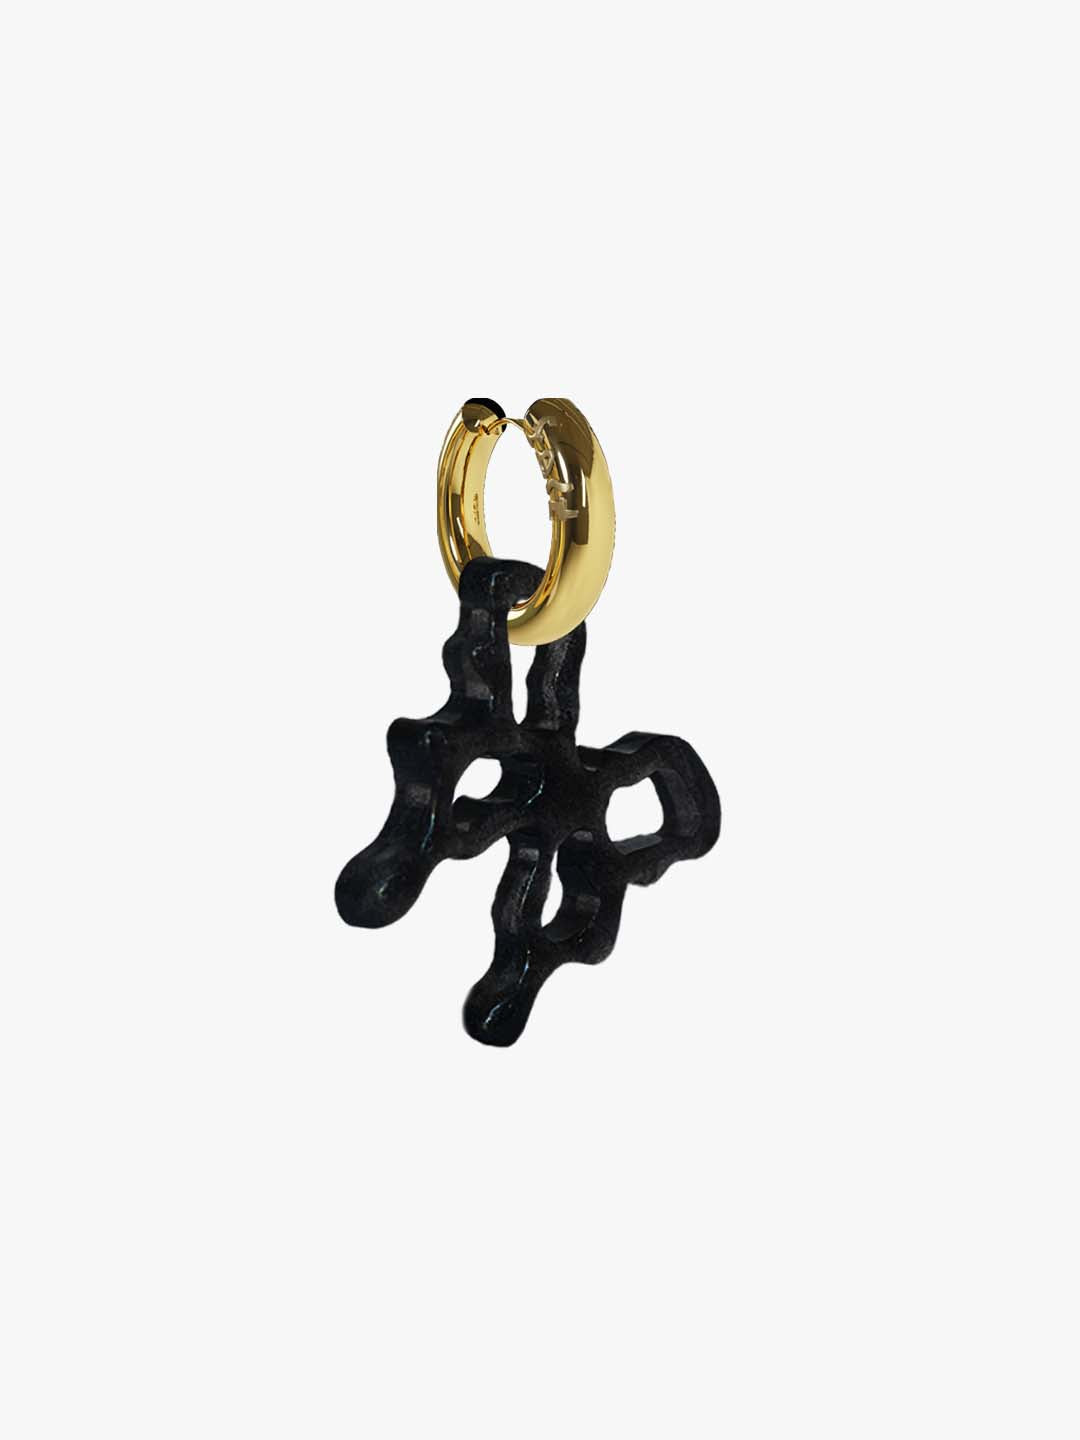 Rio black gold ear hoop (pair)